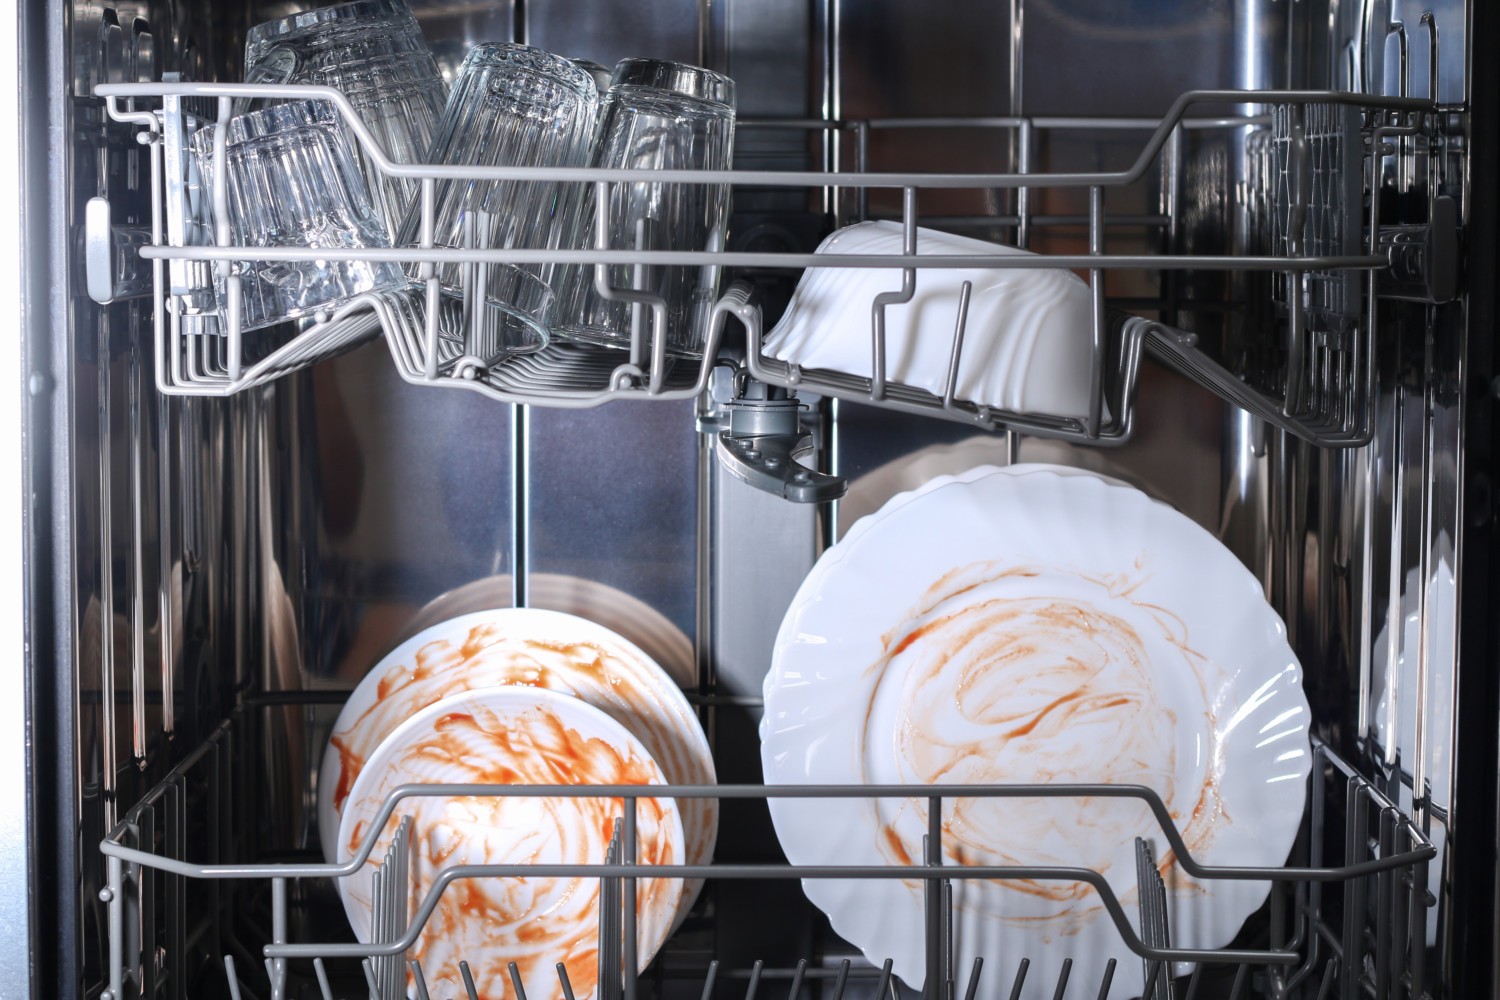 Dirty dishes sitting inside dishwasher